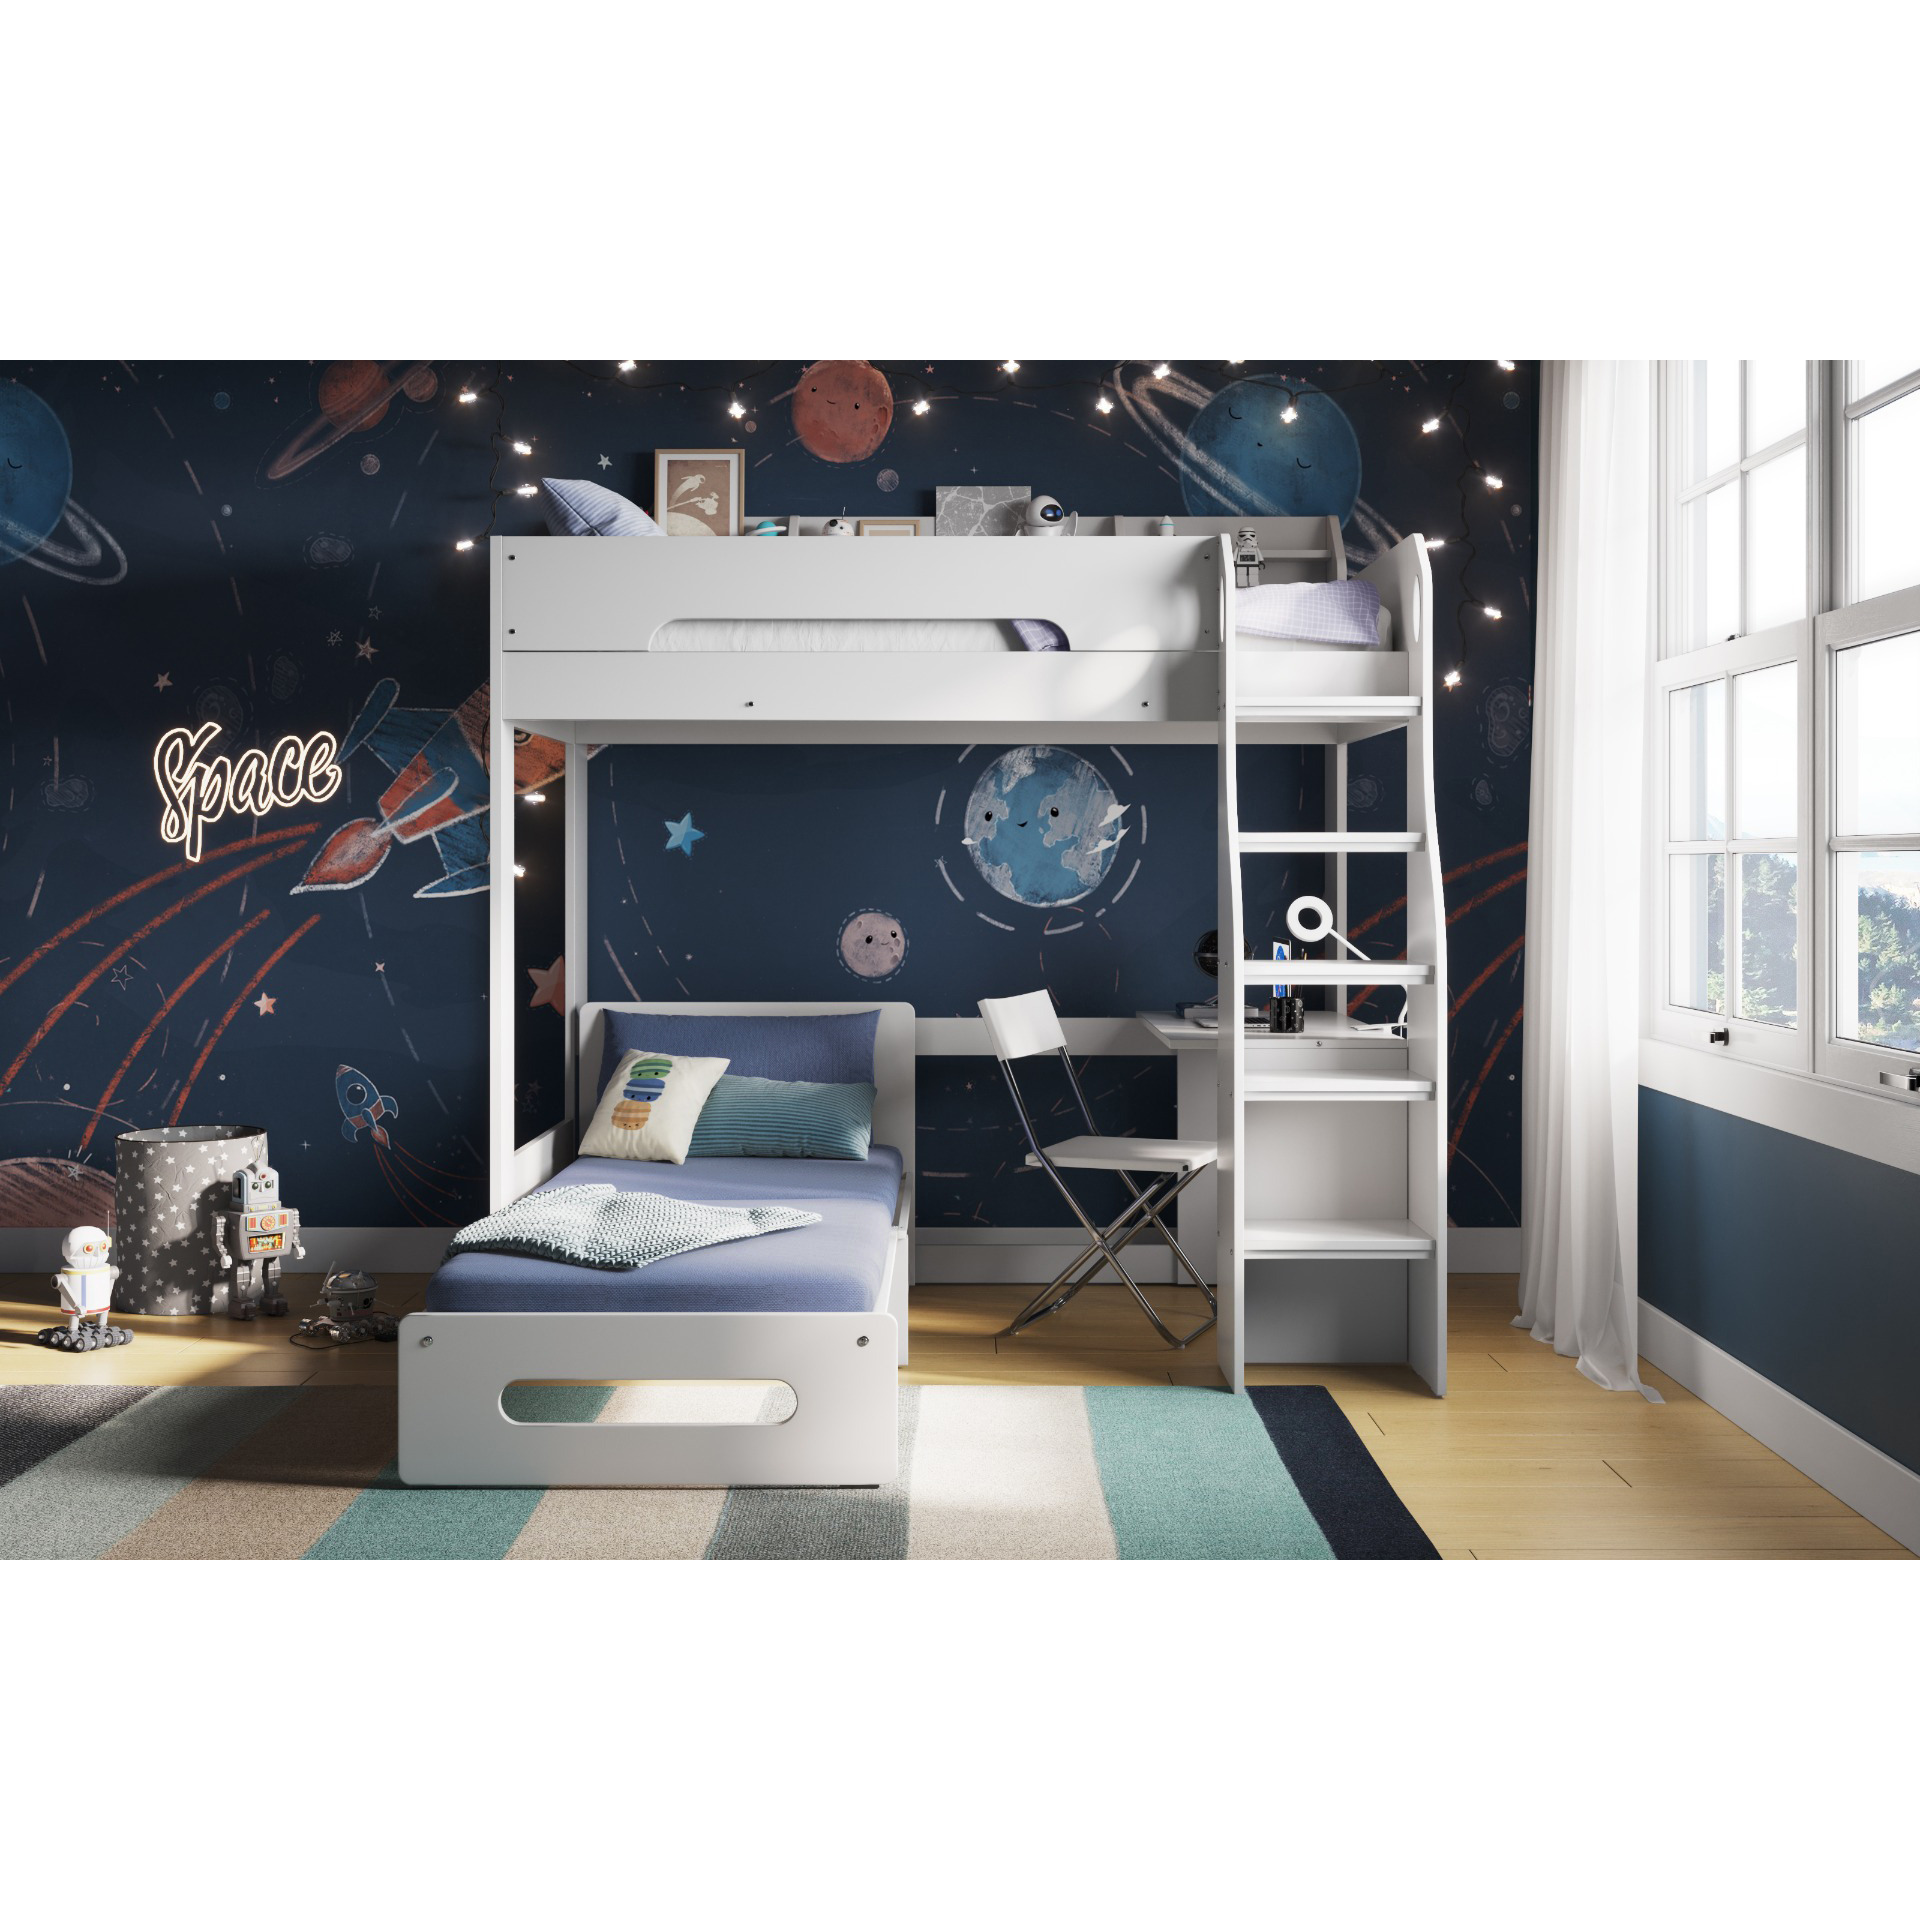 Flair Cosmic Futon High Sleeper White with Desk Navy Blue - image 1